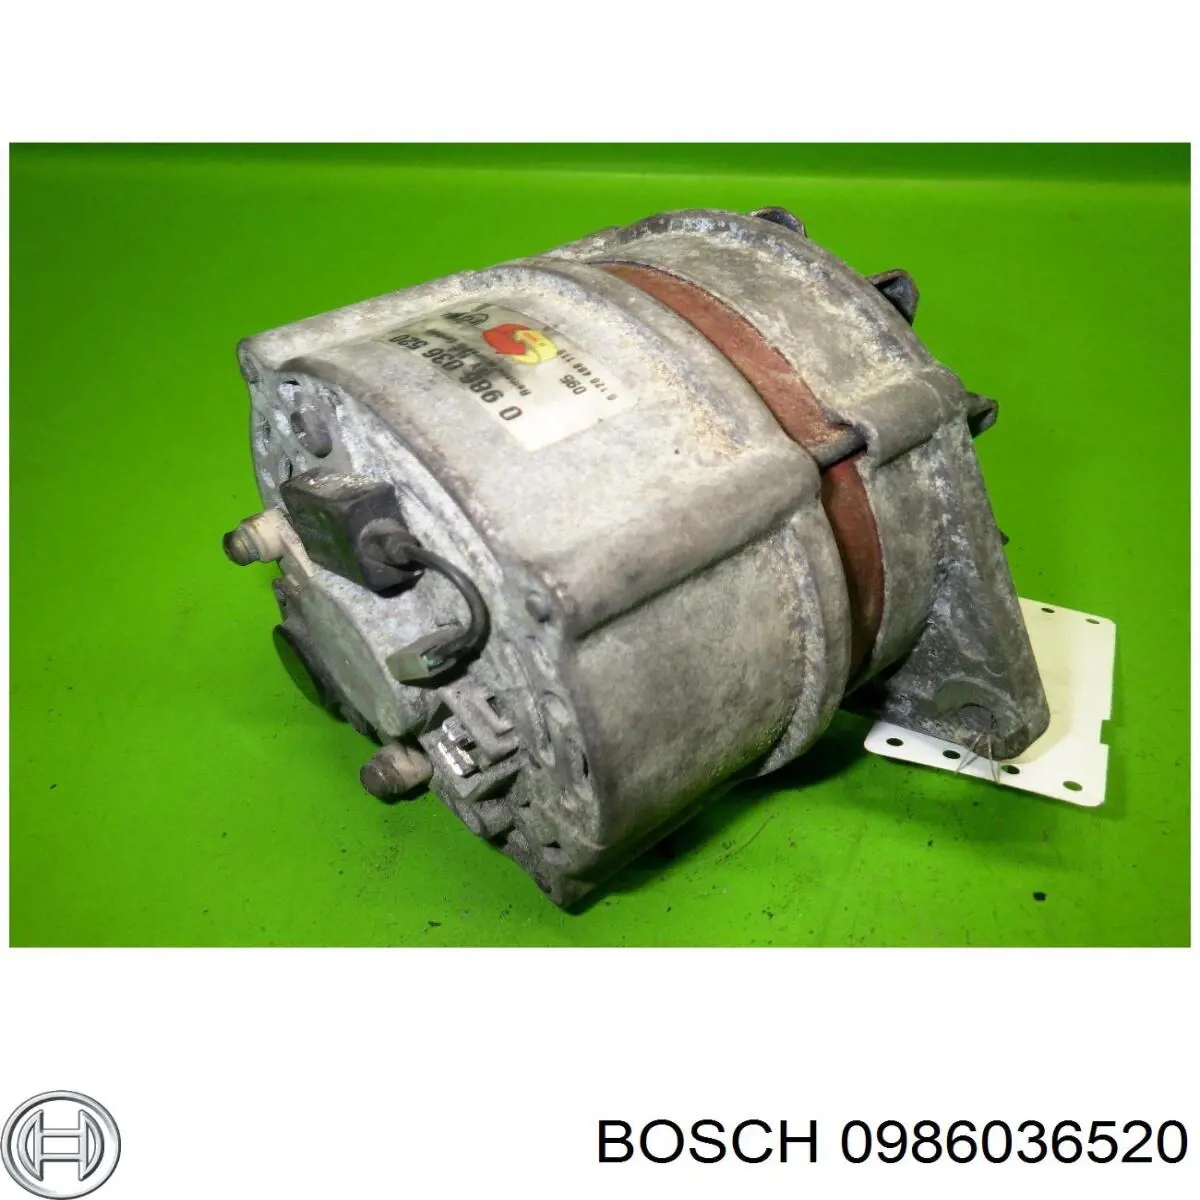 0986036520 Bosch alternador